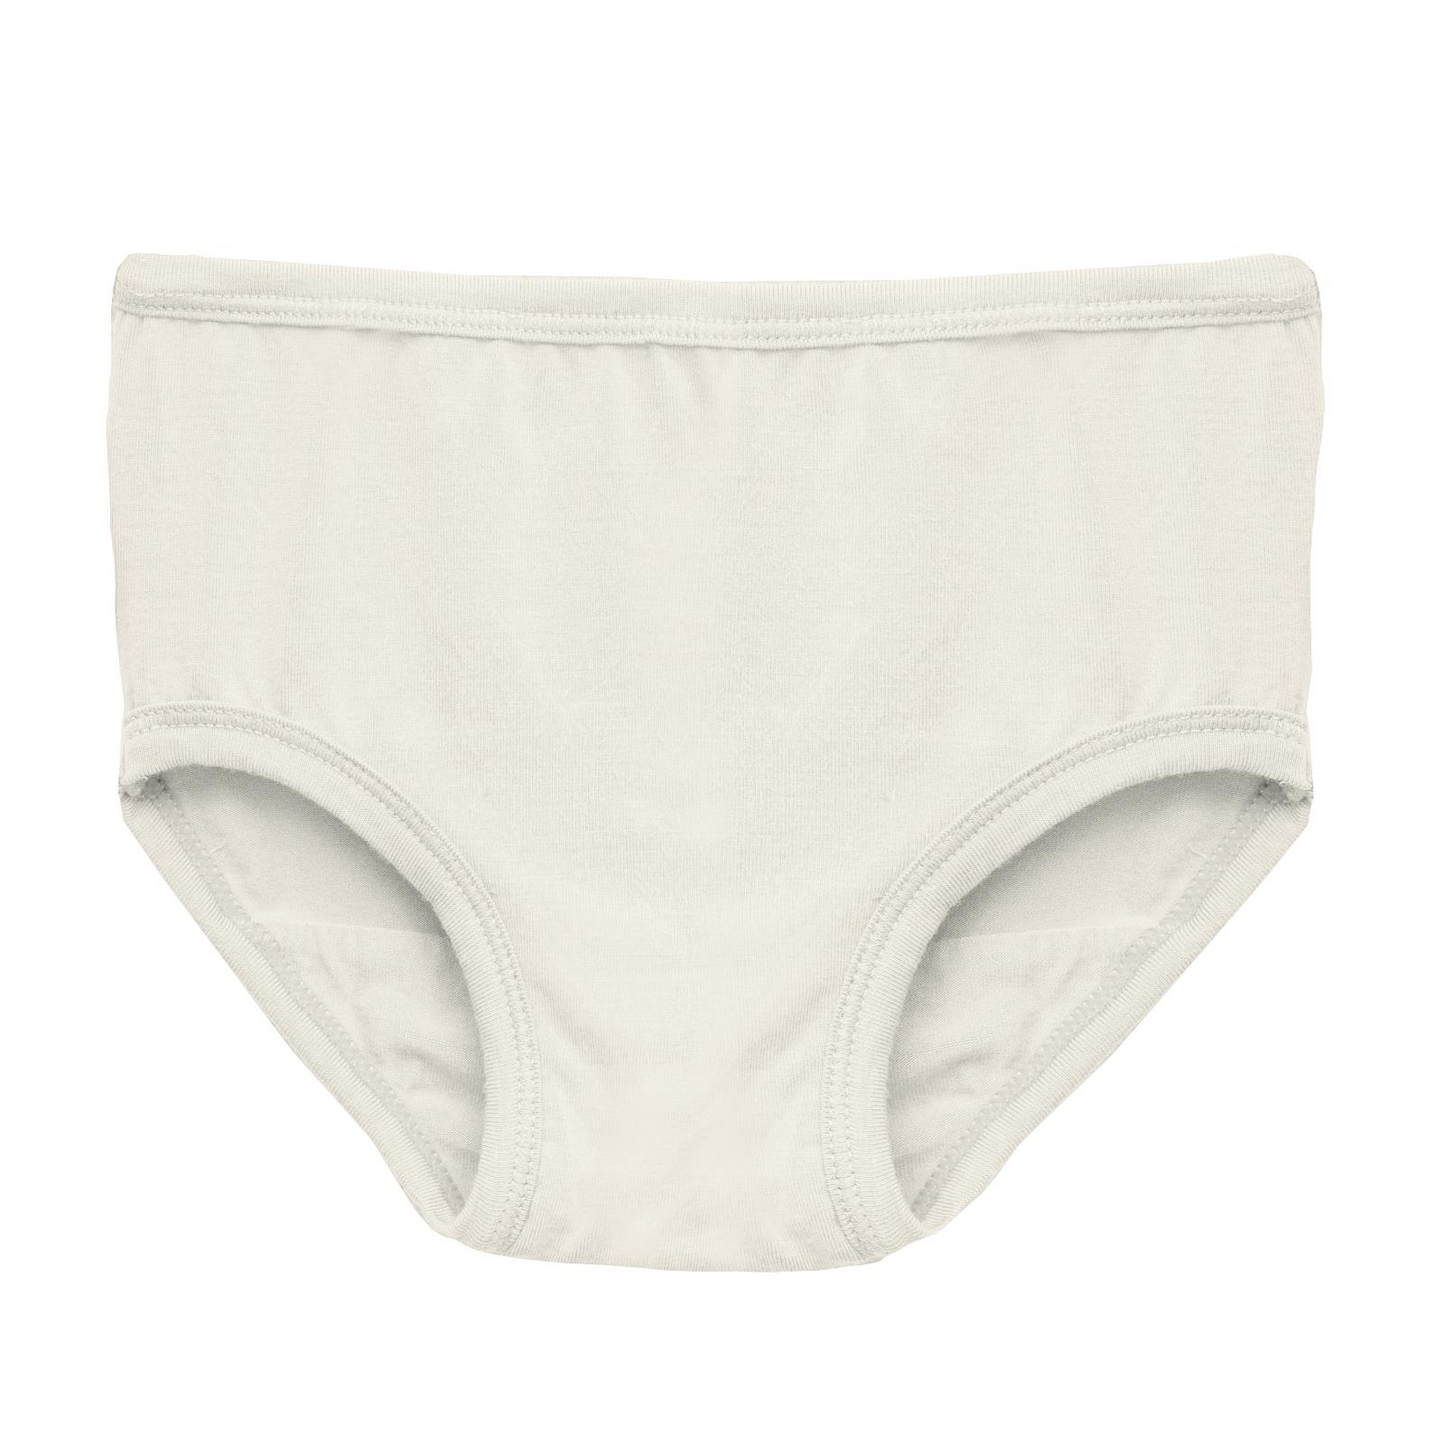 Kickee Pants Print Girl's Underwear Set of 3 Cake Pop Swan Princess, Natural & Tulip Johnny Appleseed